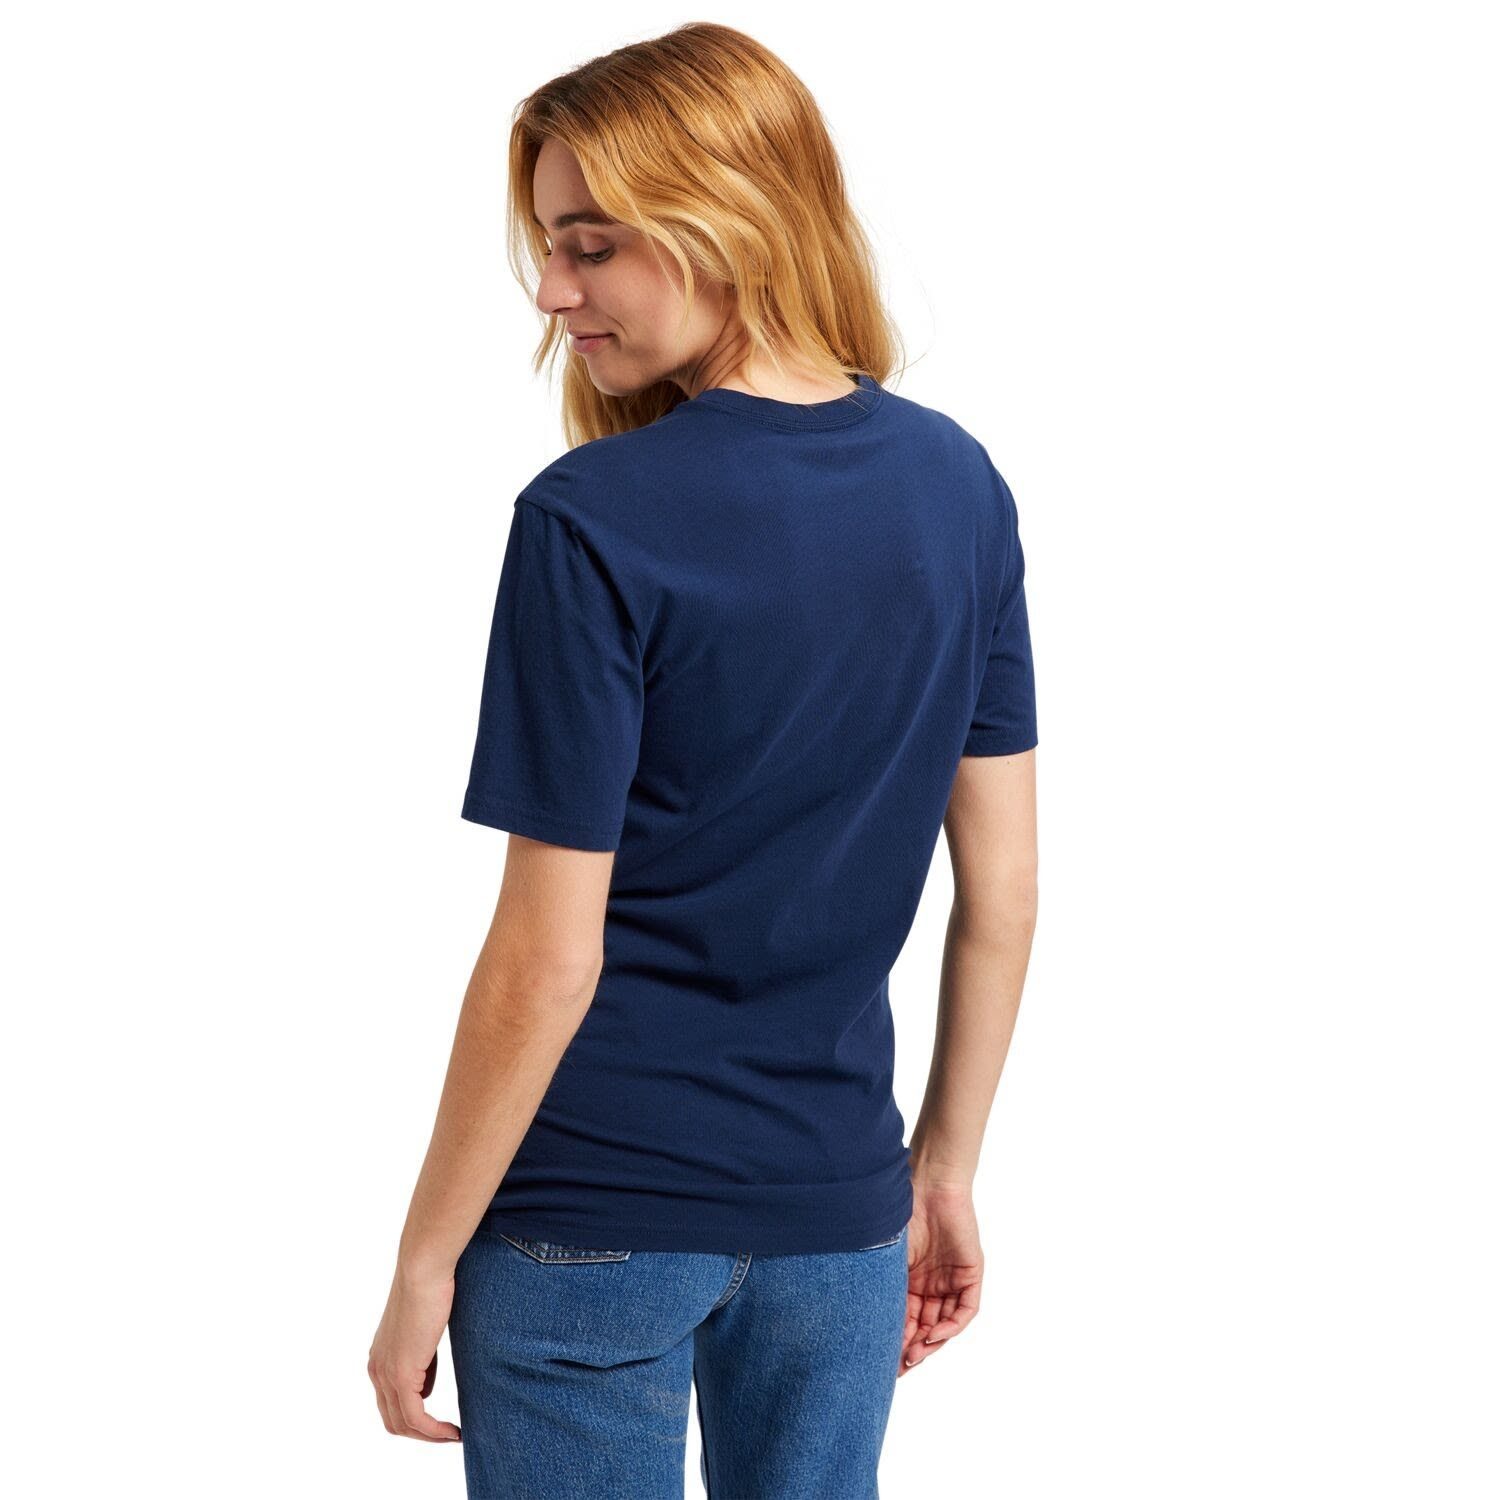 T-Shirt Kurzarm-Shirt Underhill Burton Shortsleeve Burton Tee Blue Dress